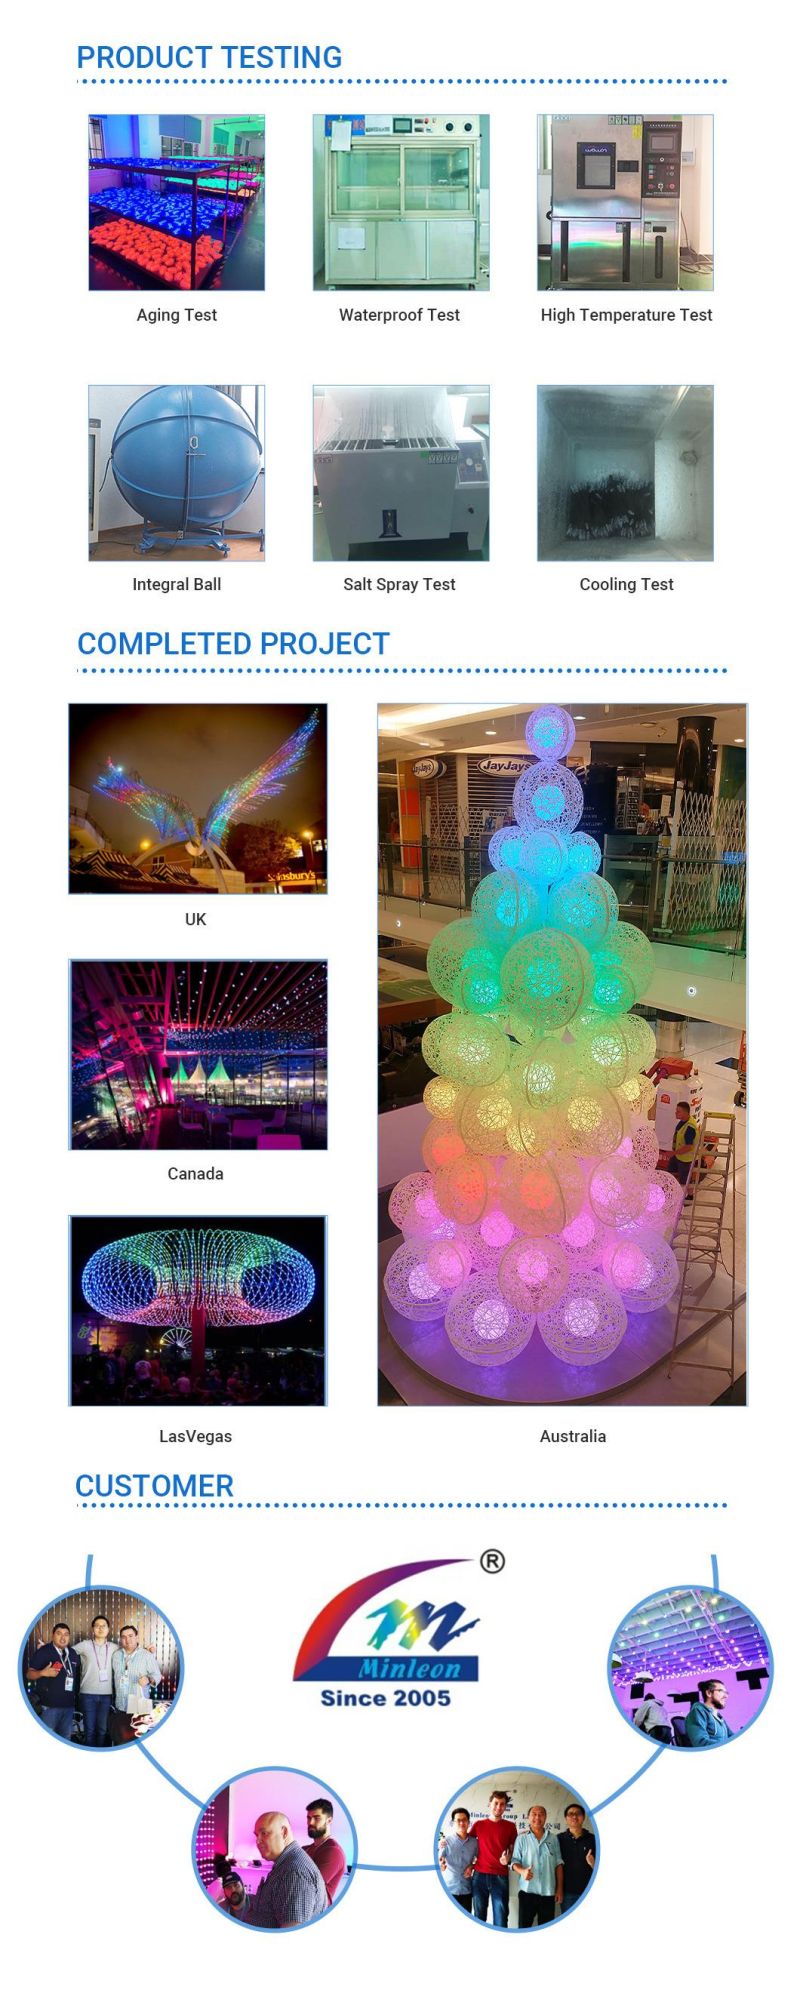 LED Light RGB Pixel Fairy Tree Set for Christmas Decoration